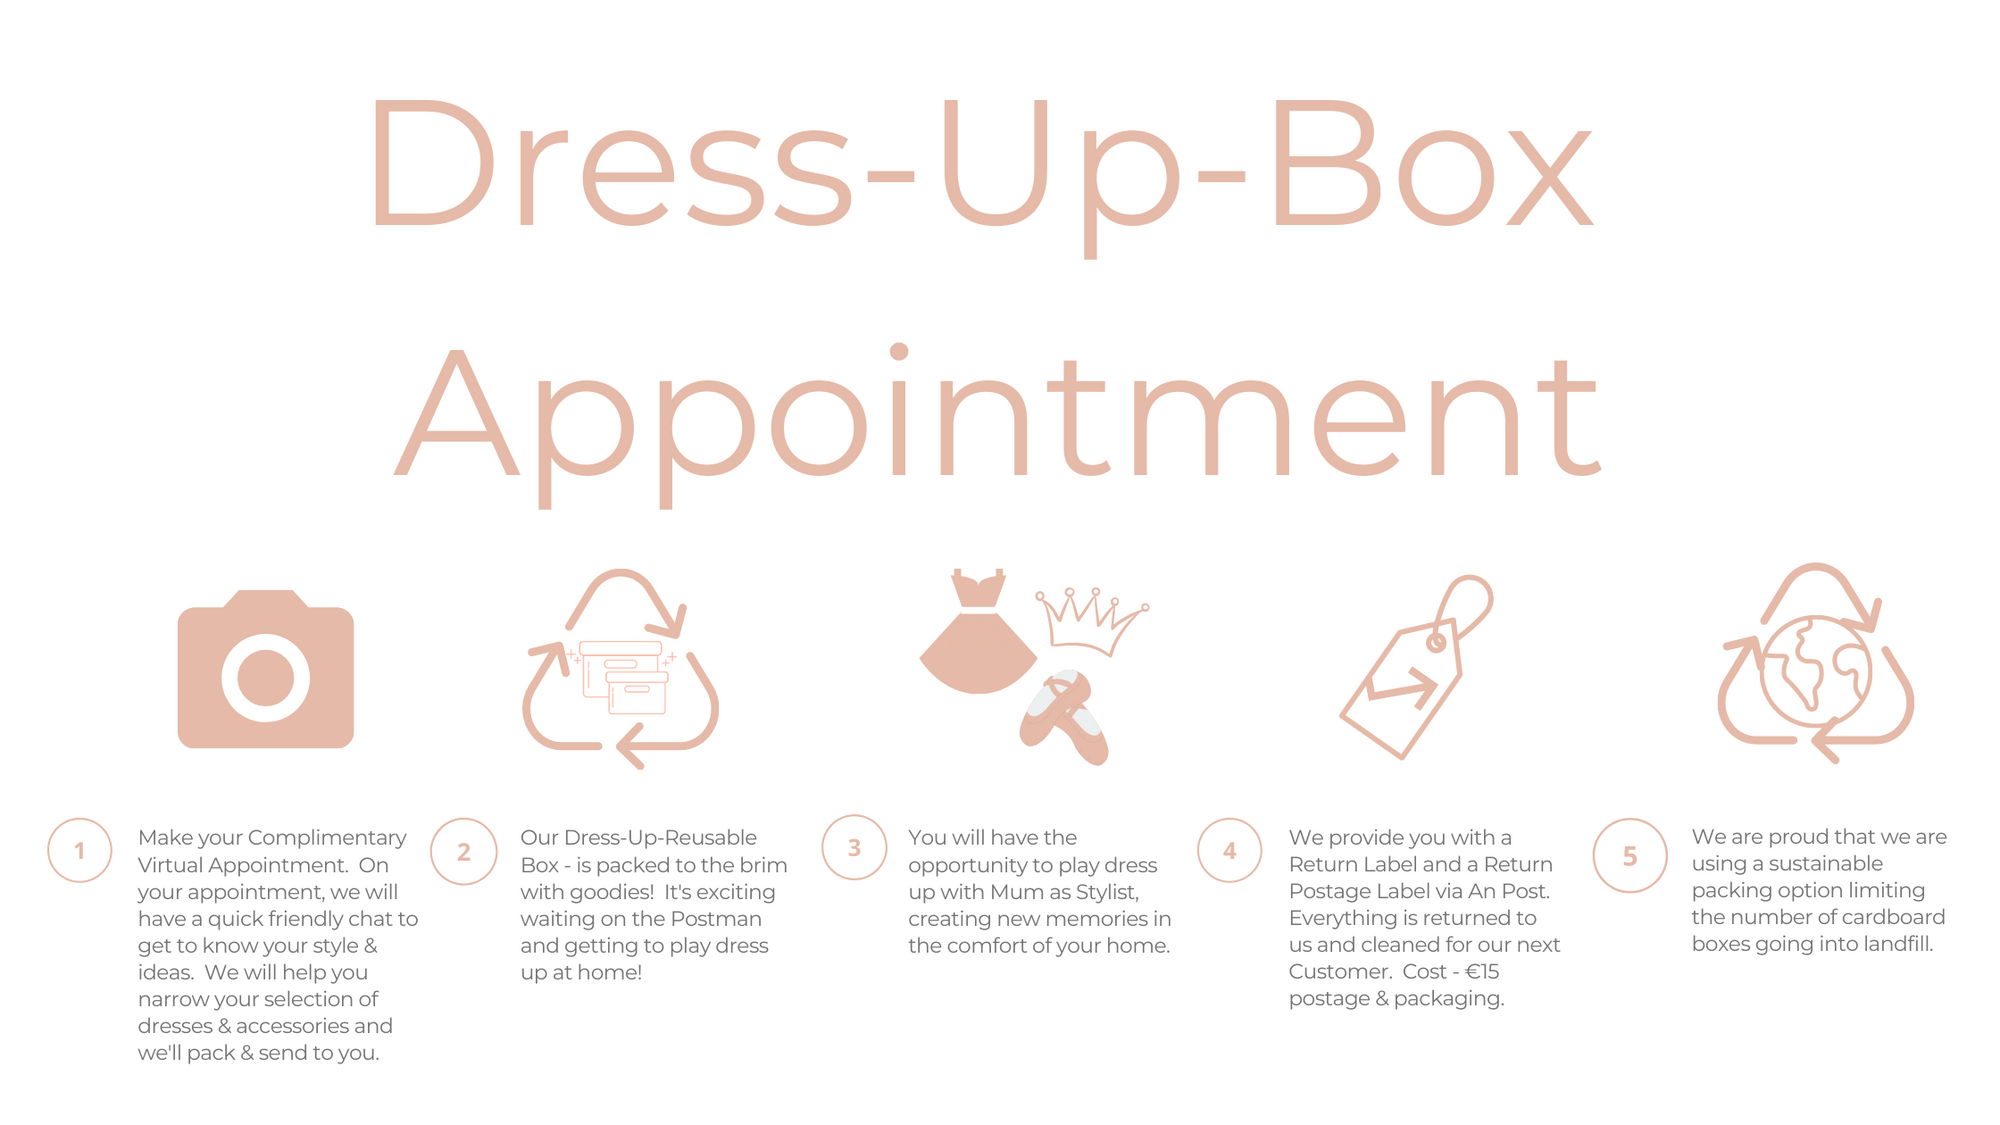 Dress-Up-Box Service